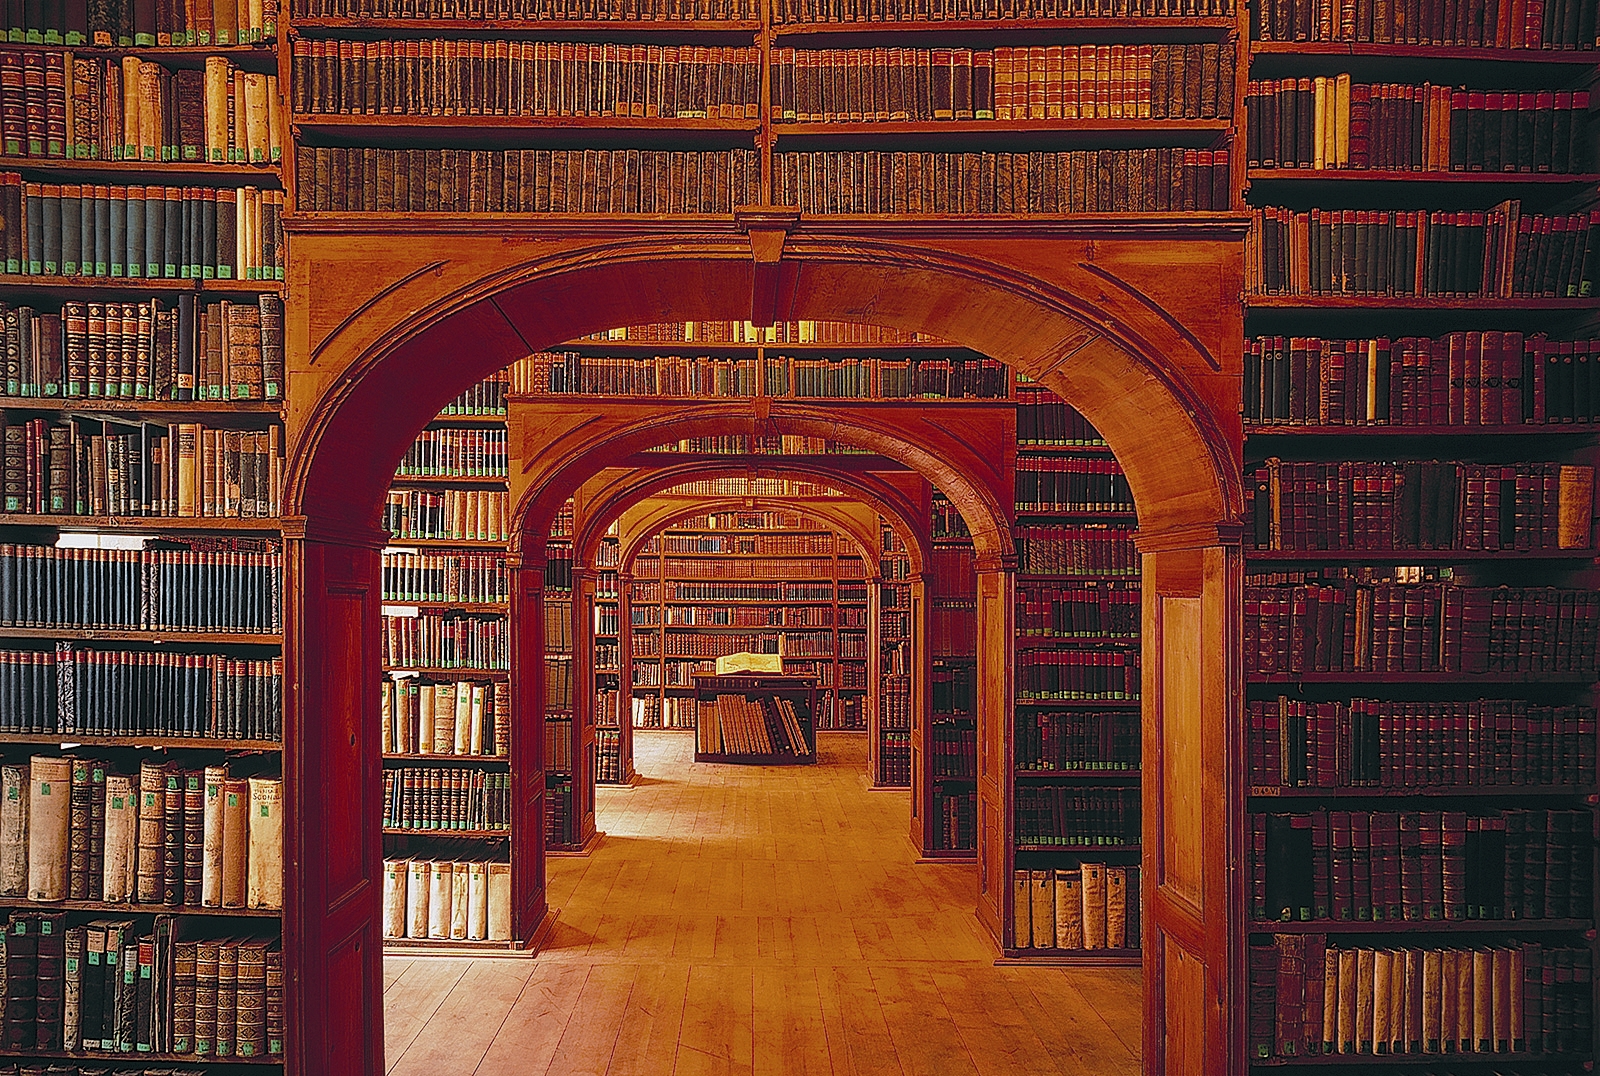 Picture libraries. Библиотека науки, Герлиц, Германия. Библиотека город Гёрлиц Германия. Старинная библиотека. Библиотека фон.